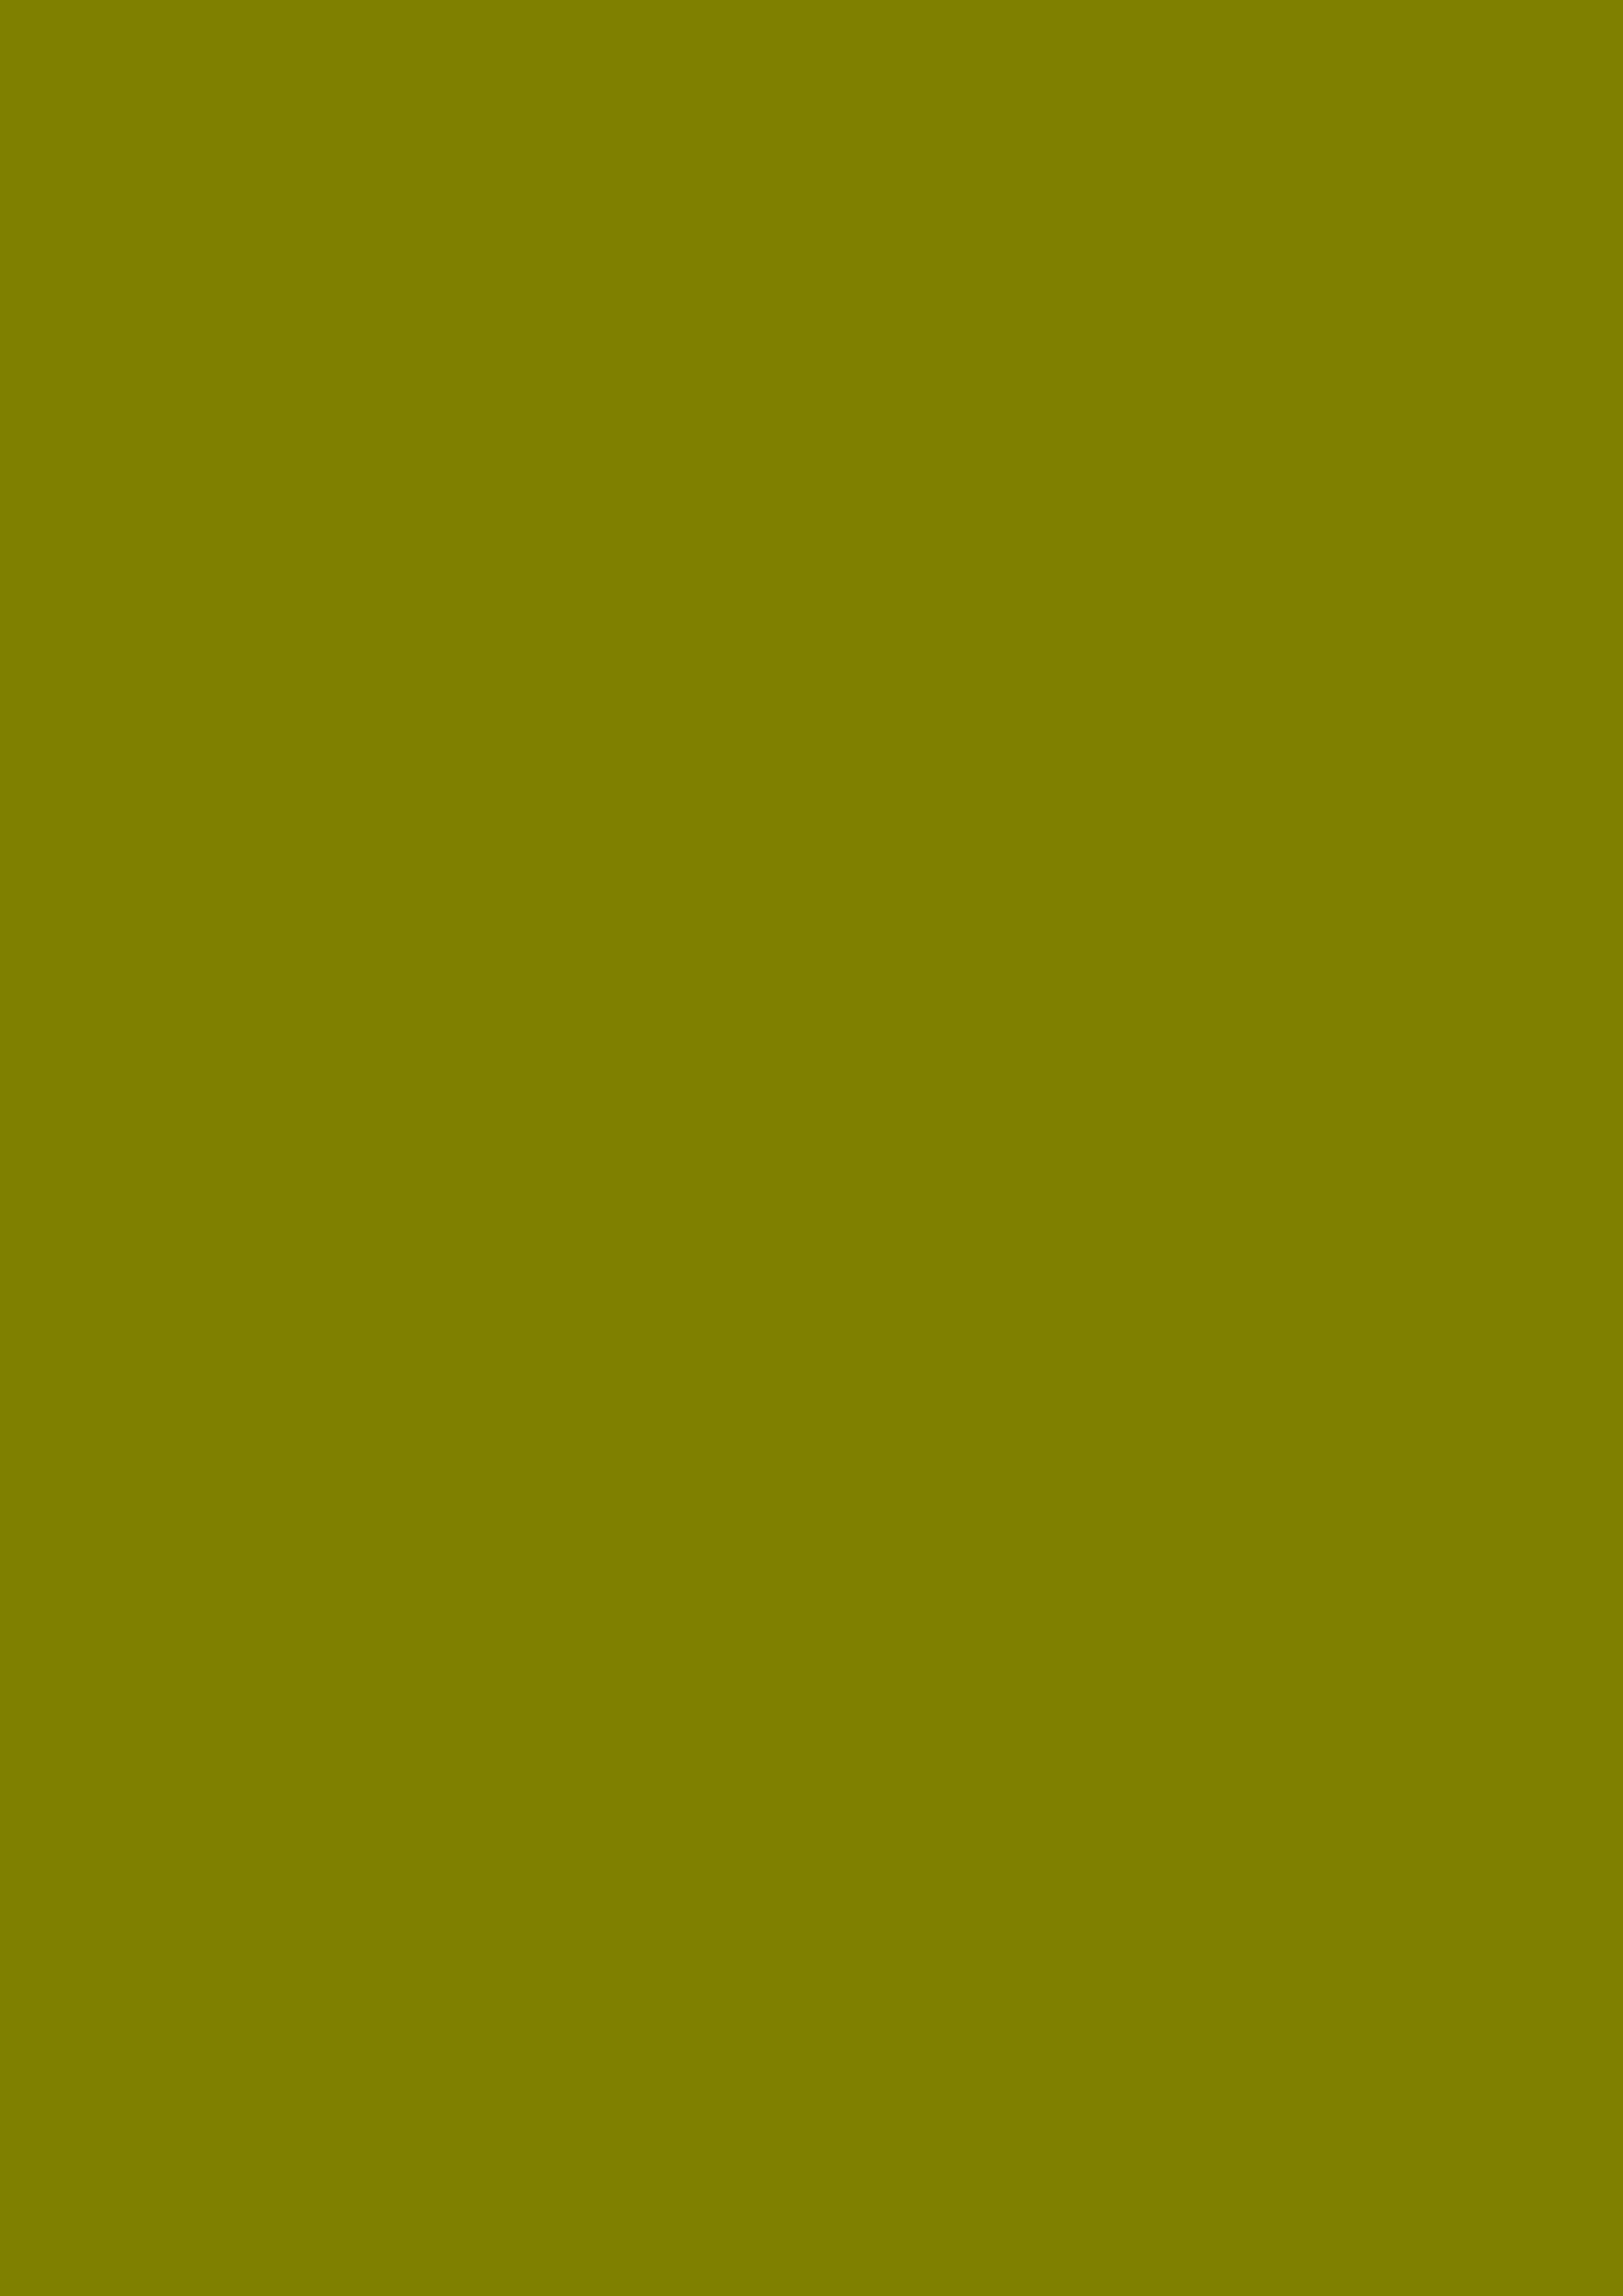 2480x3508 Olive Solid Color Background